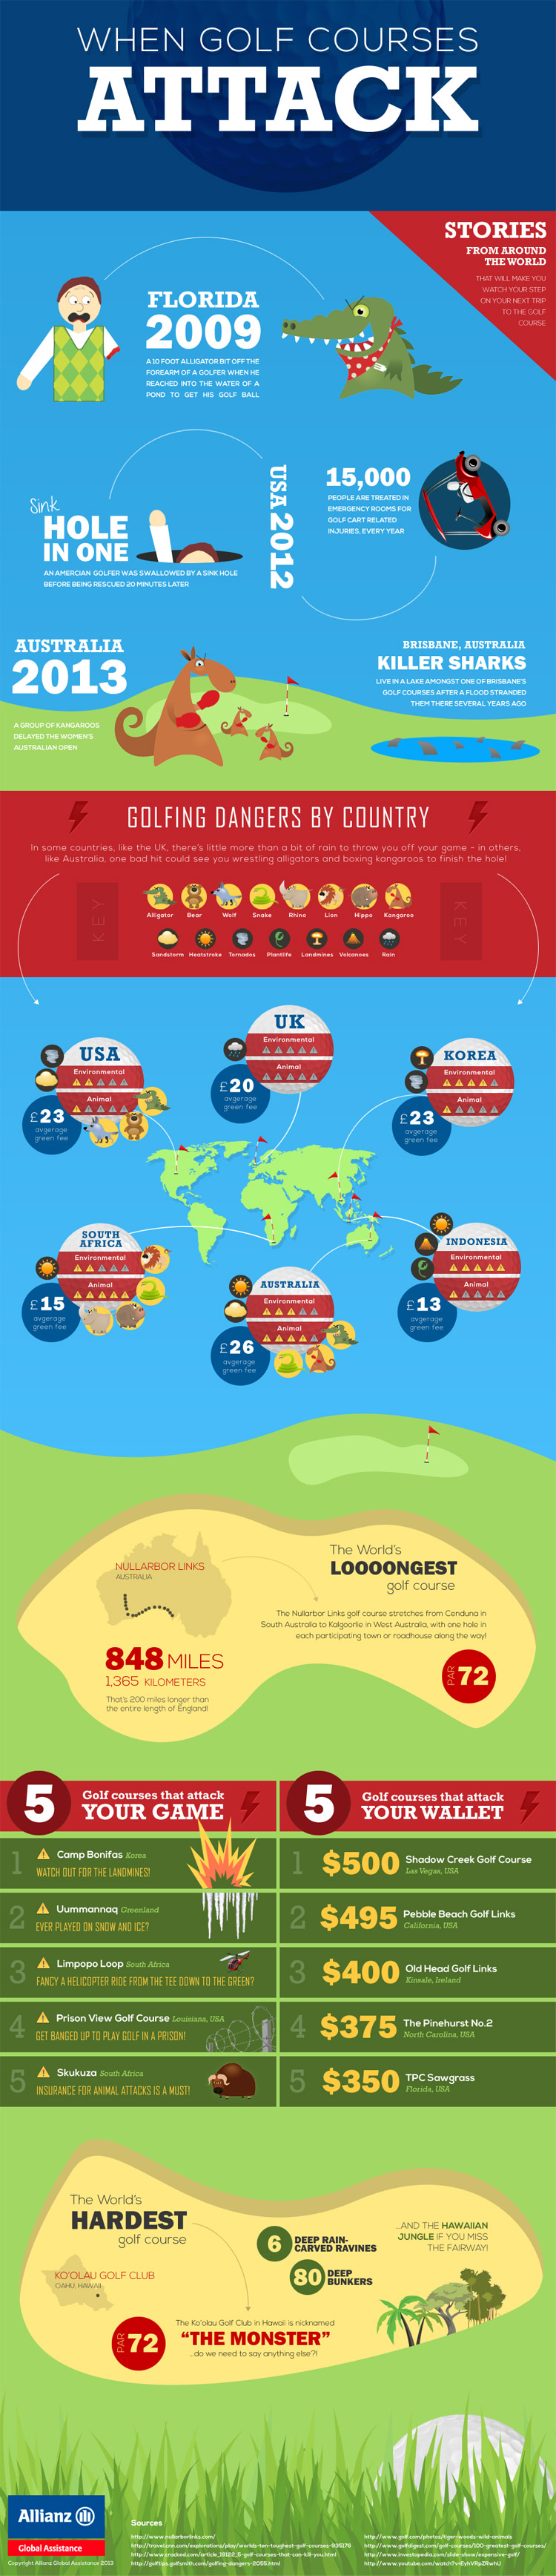 Allianz Infographic - When Golf Courses Attack